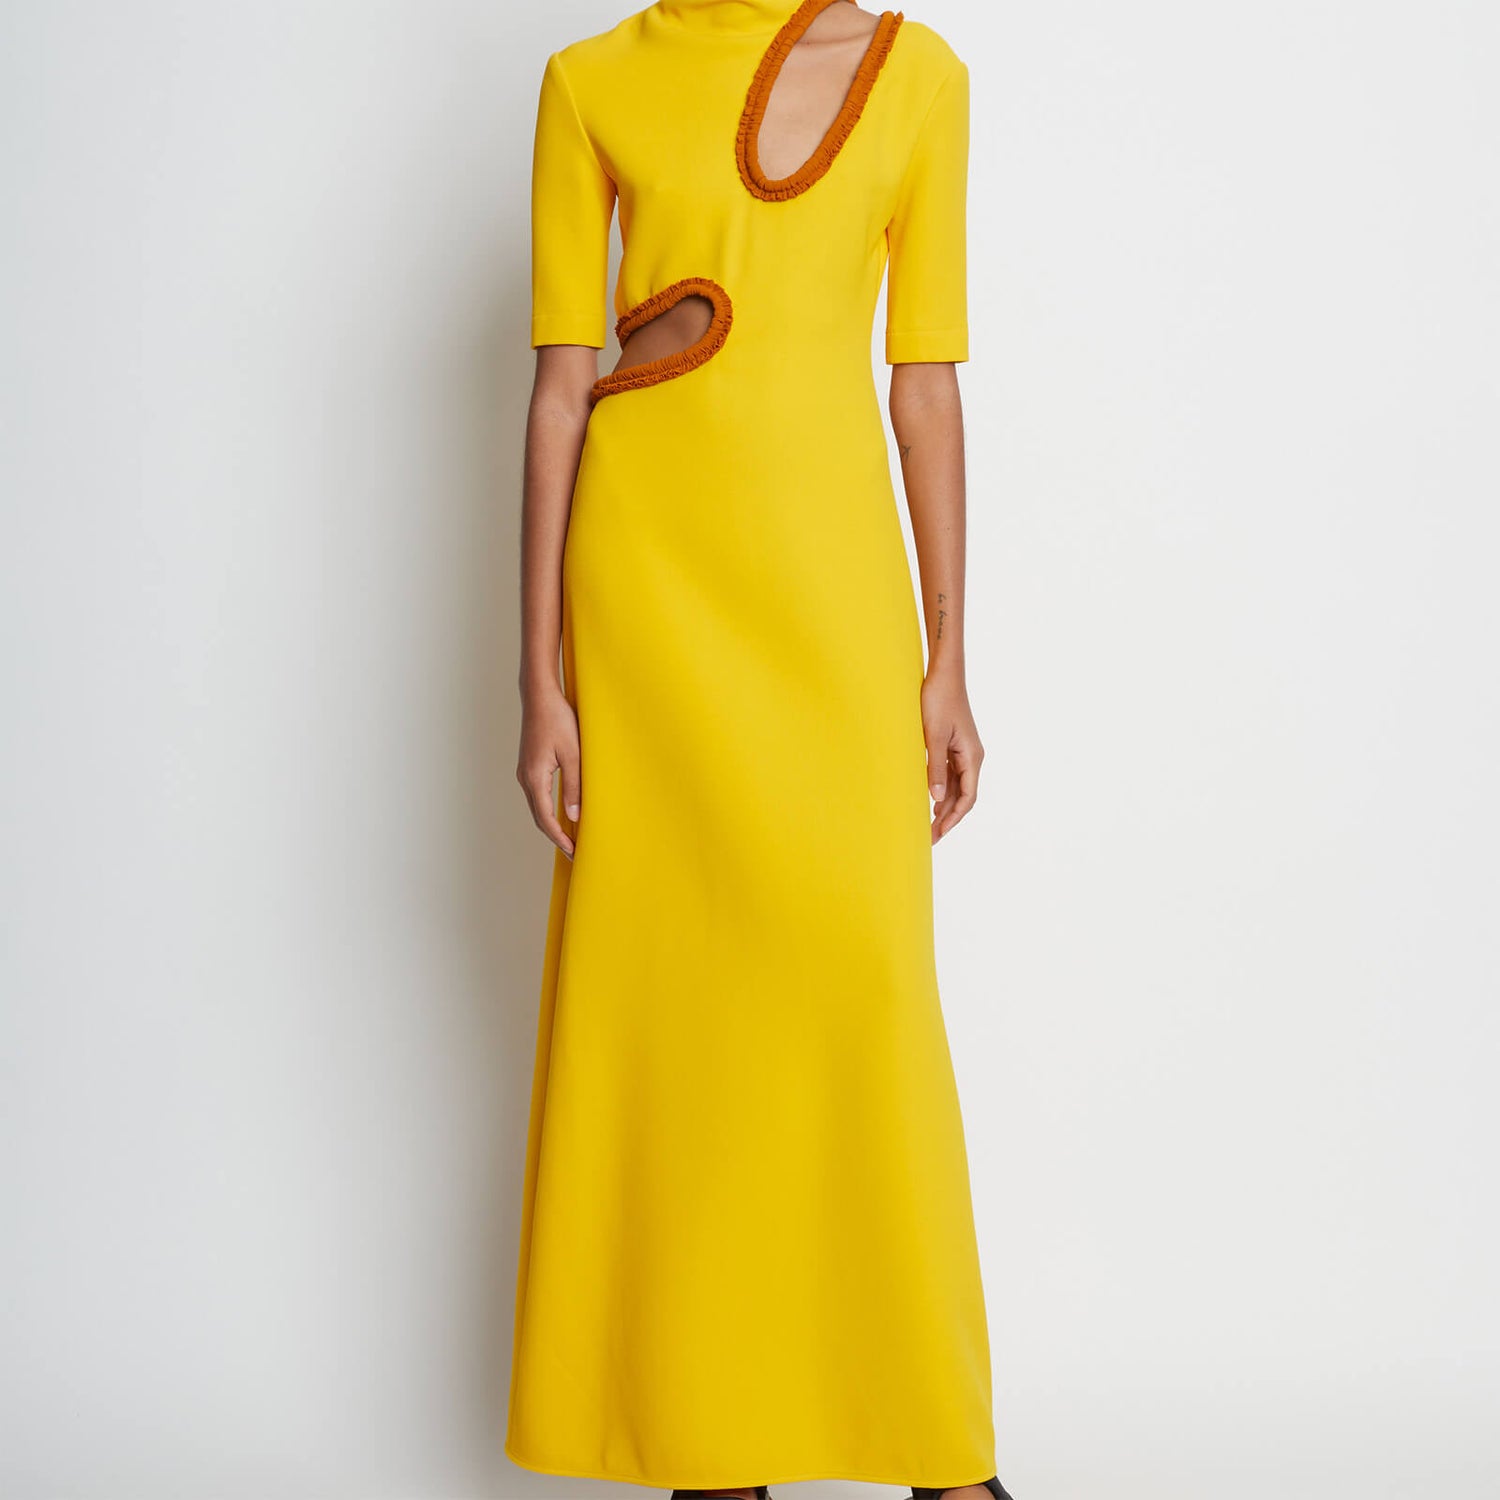 Proenza Schouler Women's Bi-Stretch Crepe Cut Out Dress - Lemon - US4/UK 10